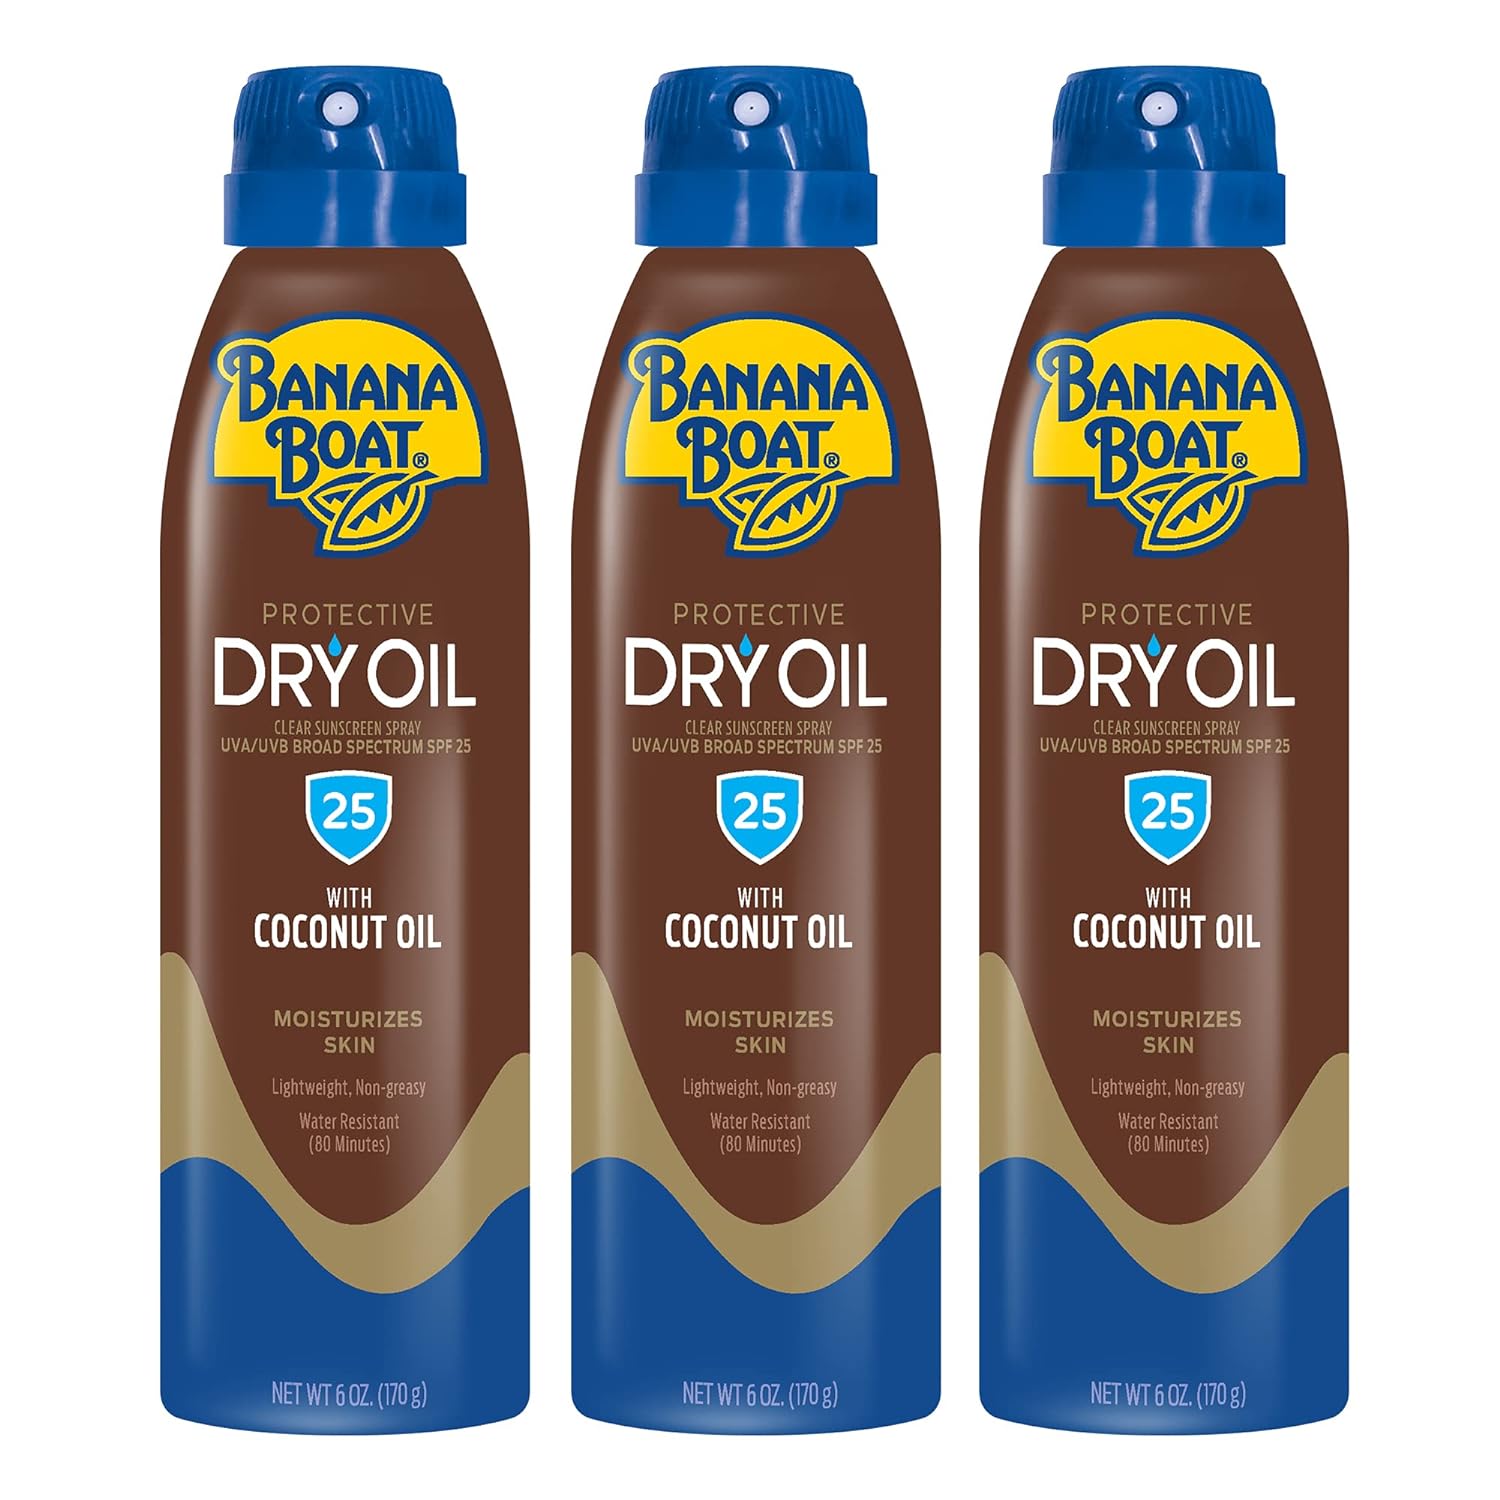 Banana Boat Protective Dry Oil Clear Spray Sunscreen SPF 25, 6oz | Tanning Sunscreen Spray, Banana Boat Dry Oil, 25 SPF Tanning Oil, Dry Tanning Oil Spray, Oxybenzone Free Sunscreen, 6oz